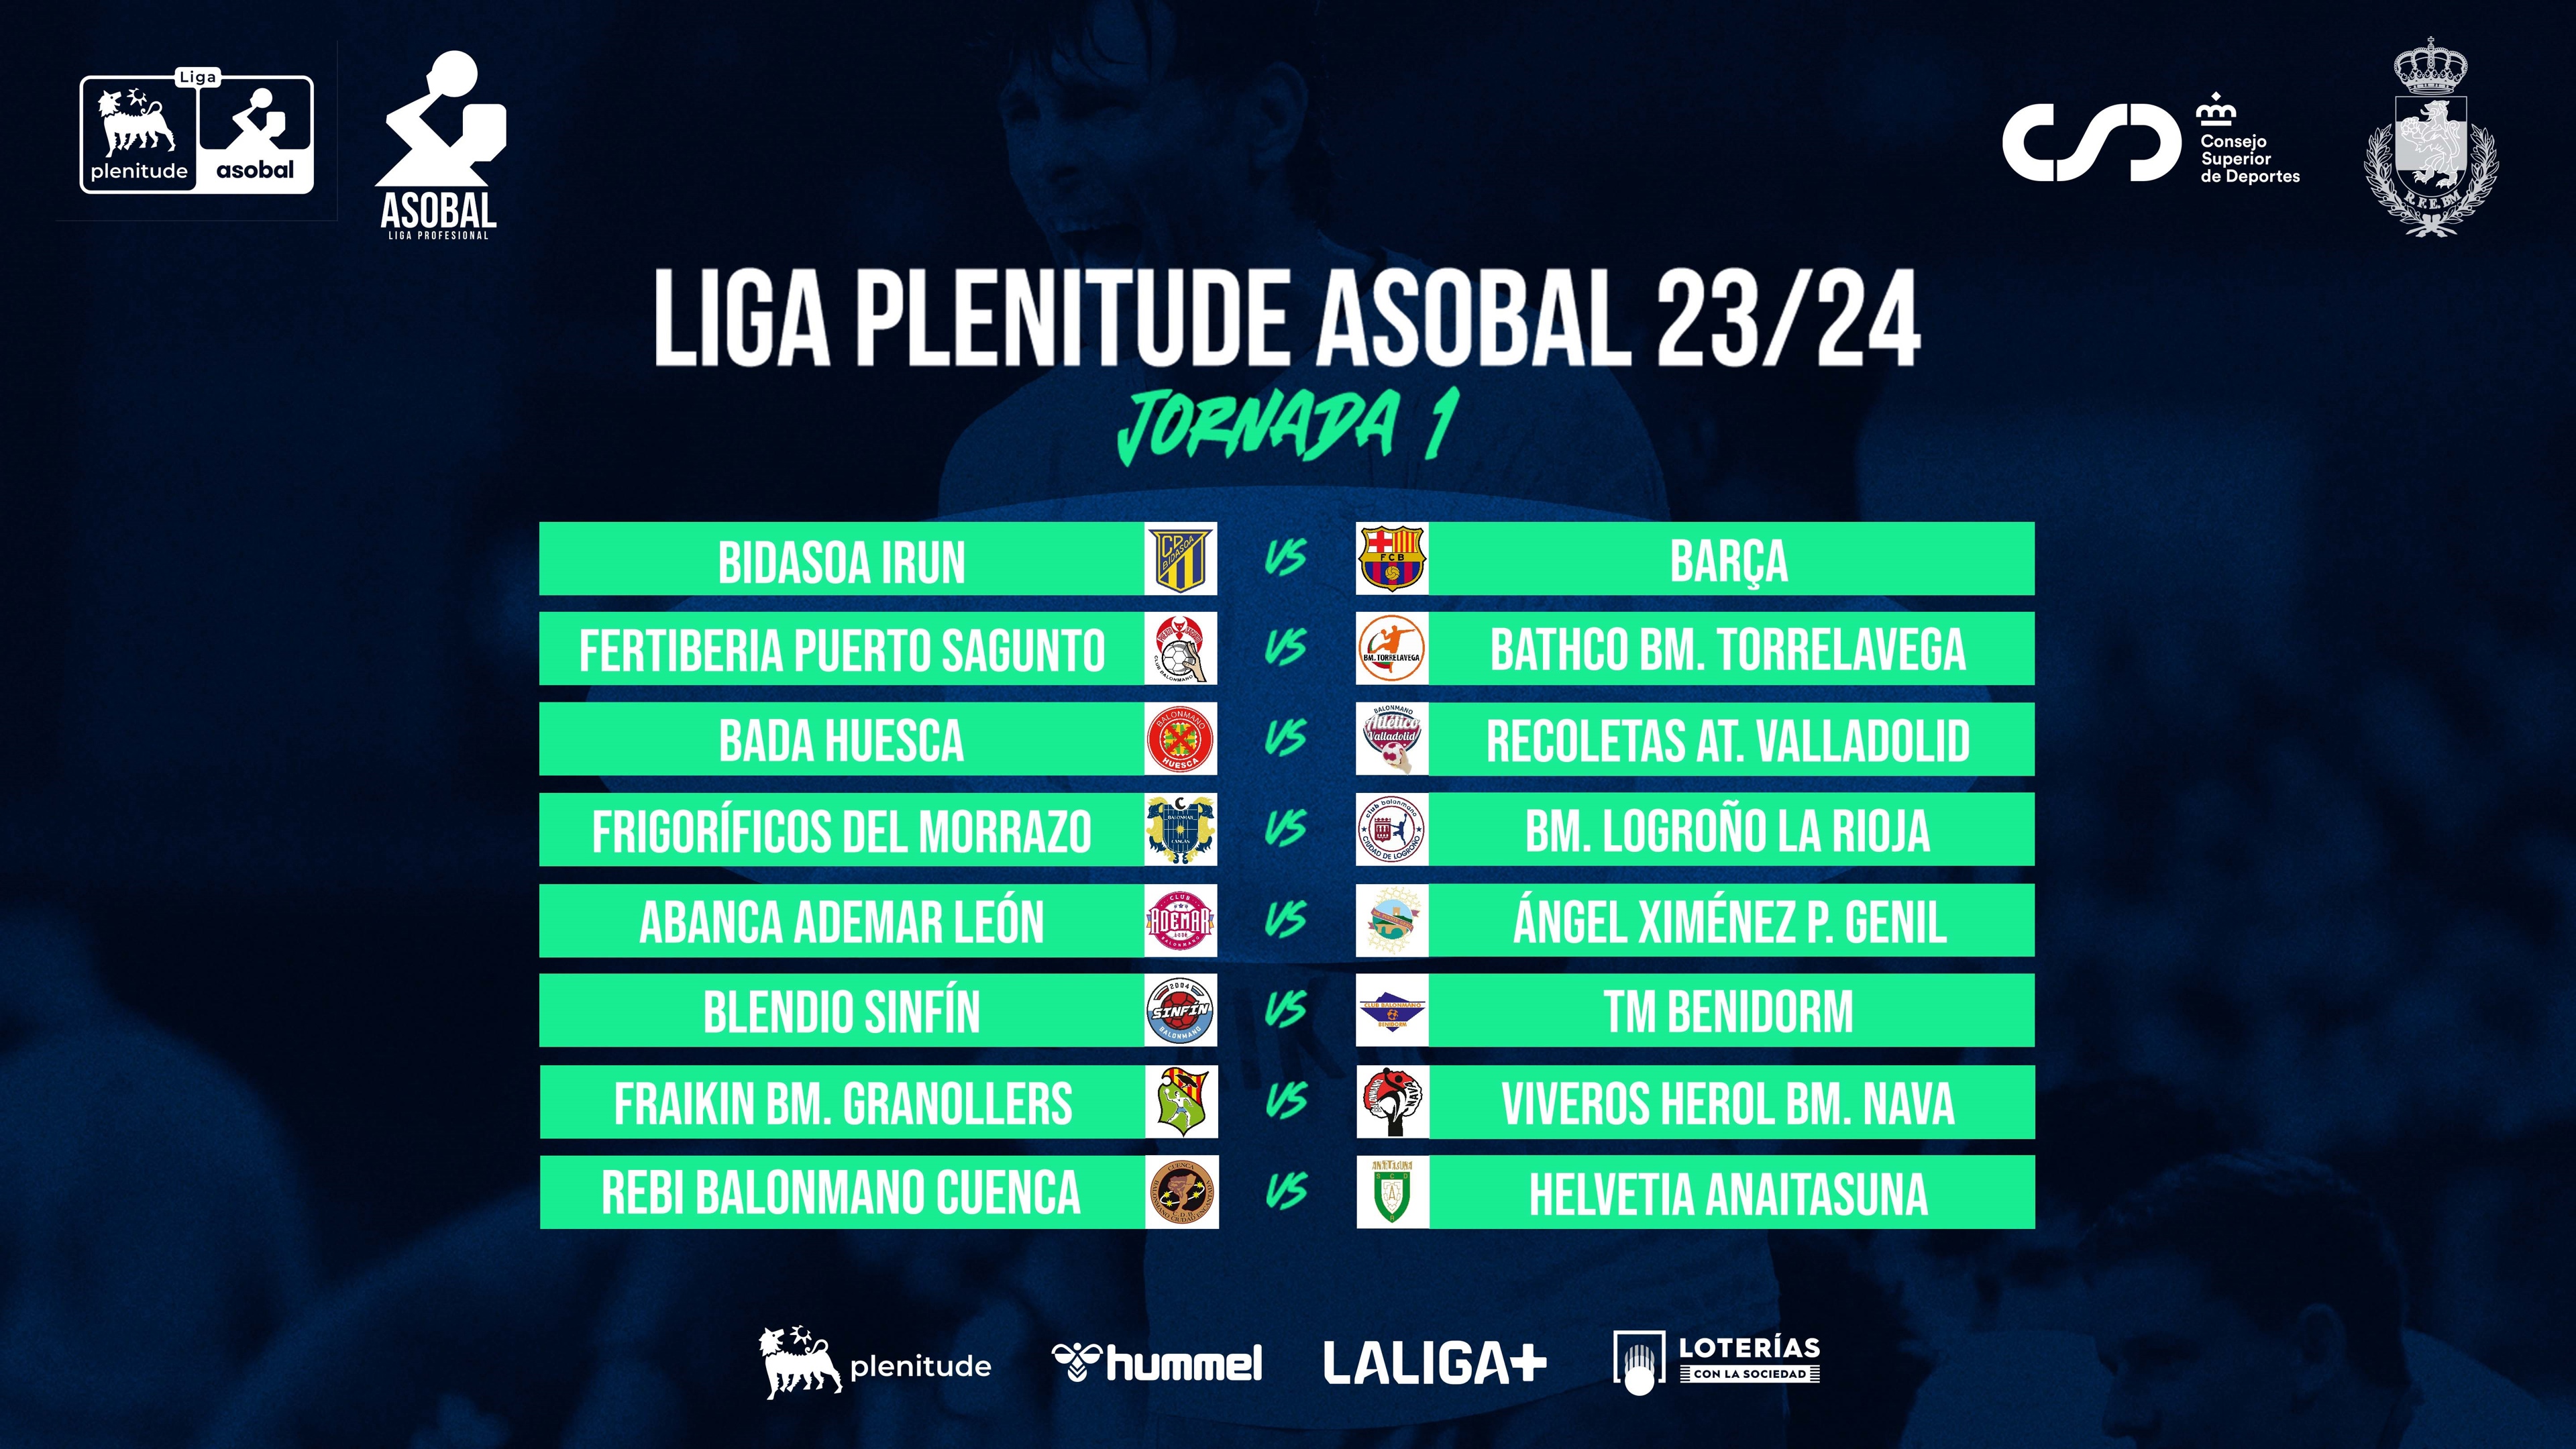 Cargar máis
Primera jornada de la Liga Plenitude ASOBAL 23-24.